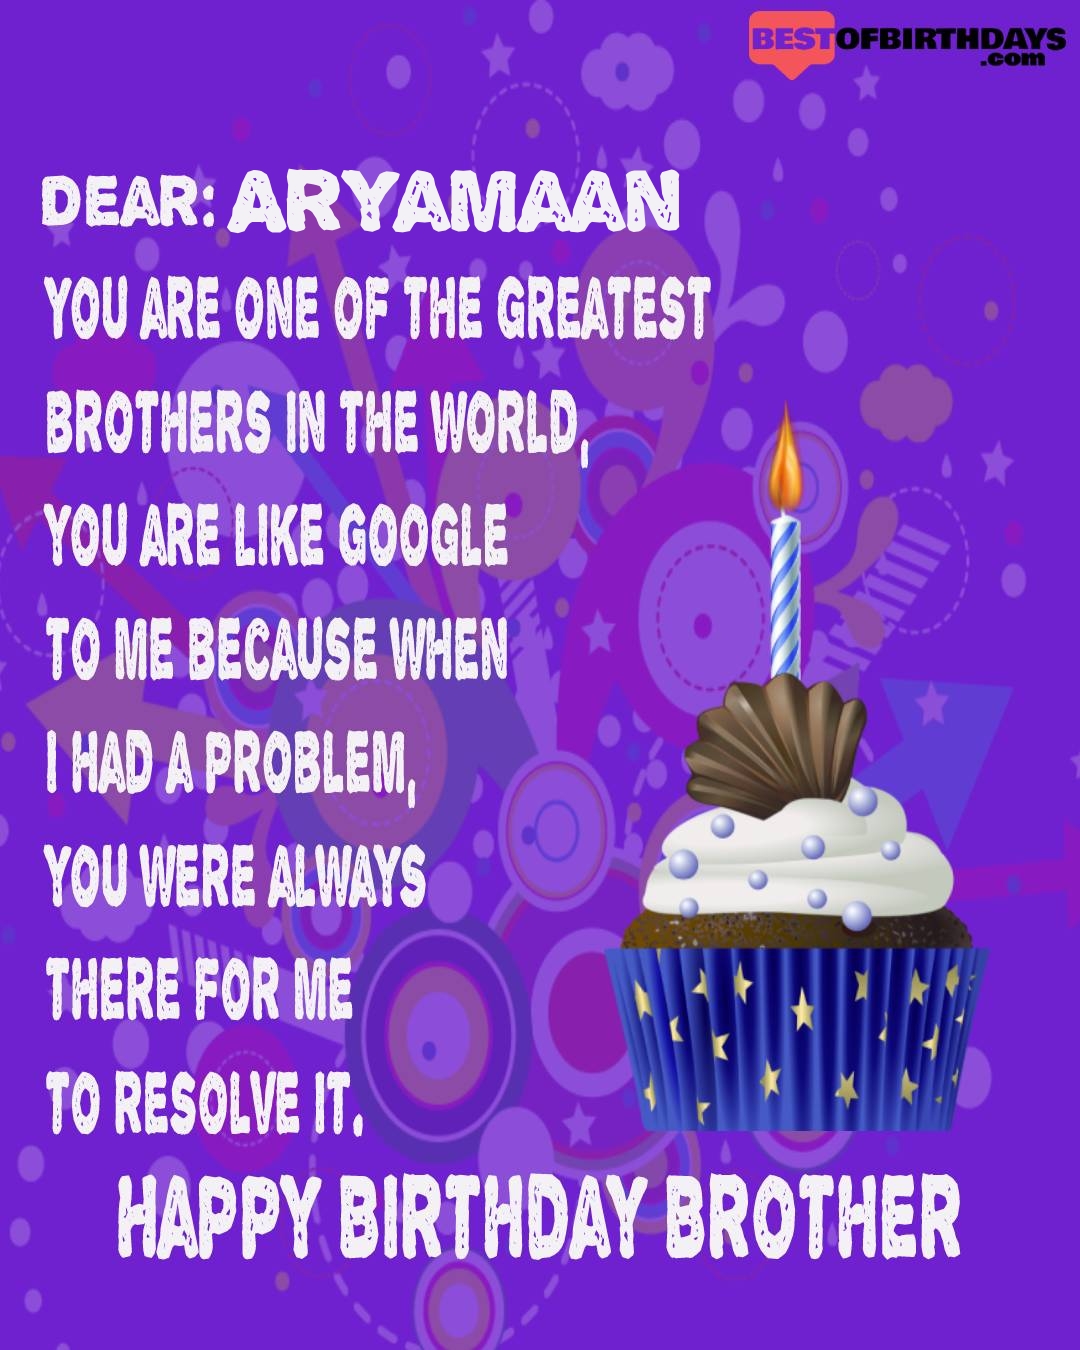 Happy birthday aryamaan bhai brother bro